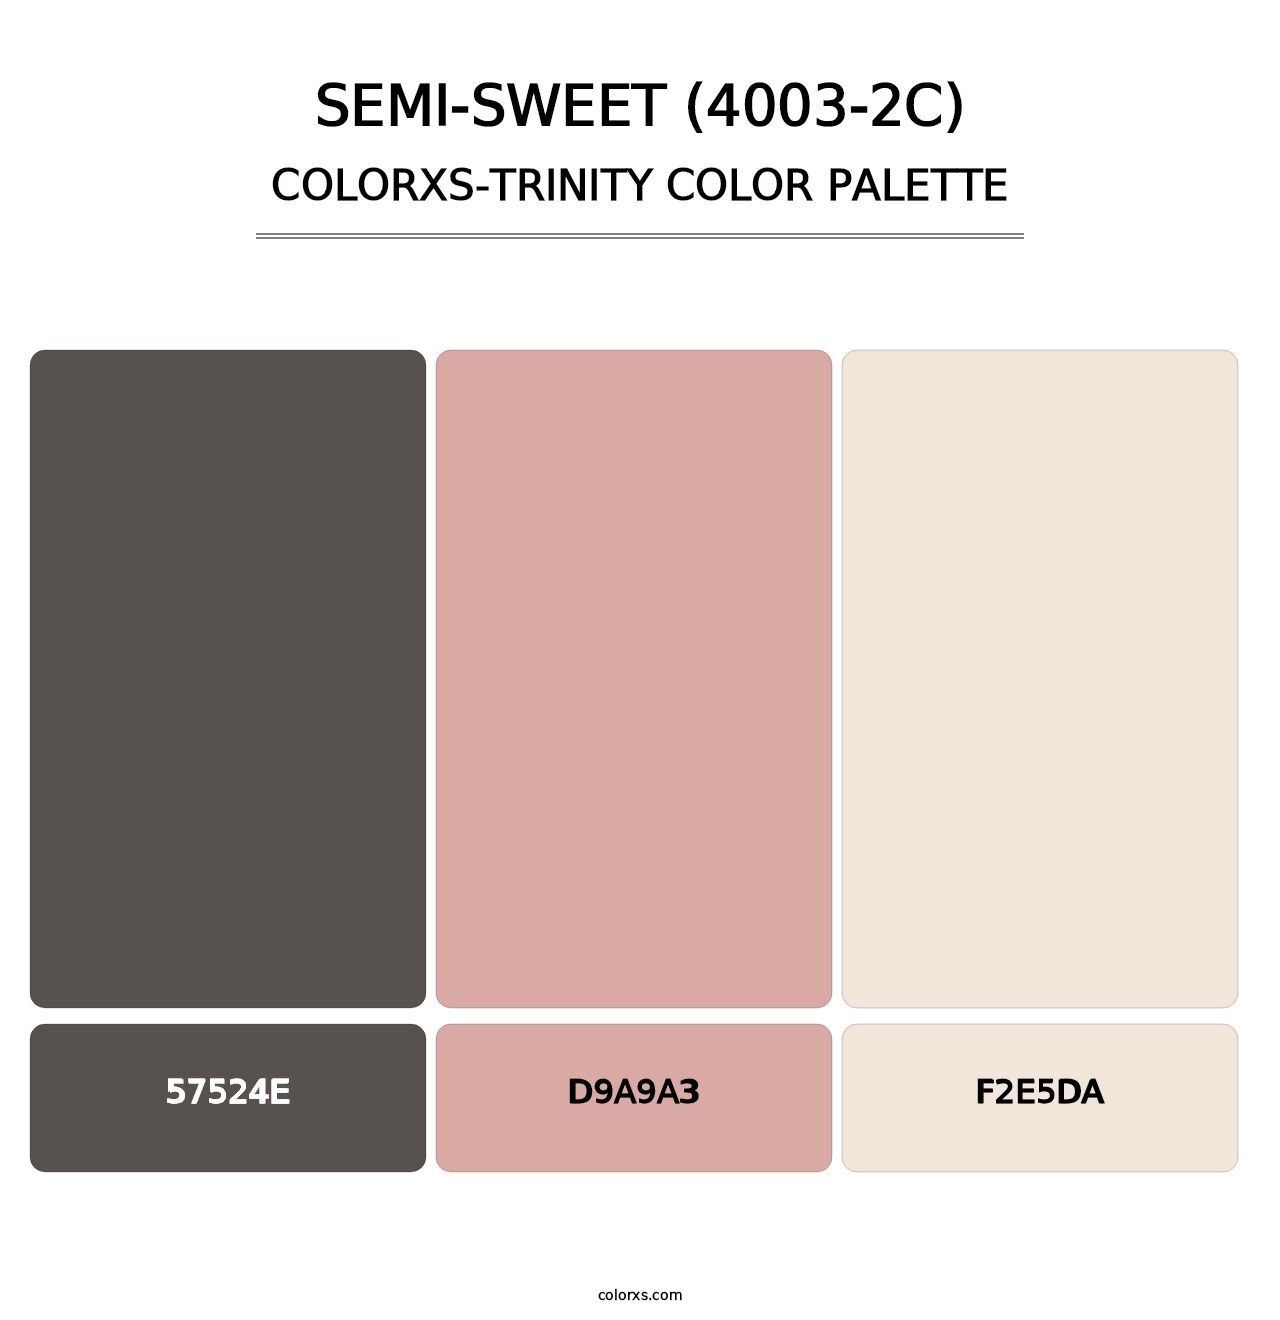 Semi-Sweet (4003-2C) - Colorxs Trinity Palette